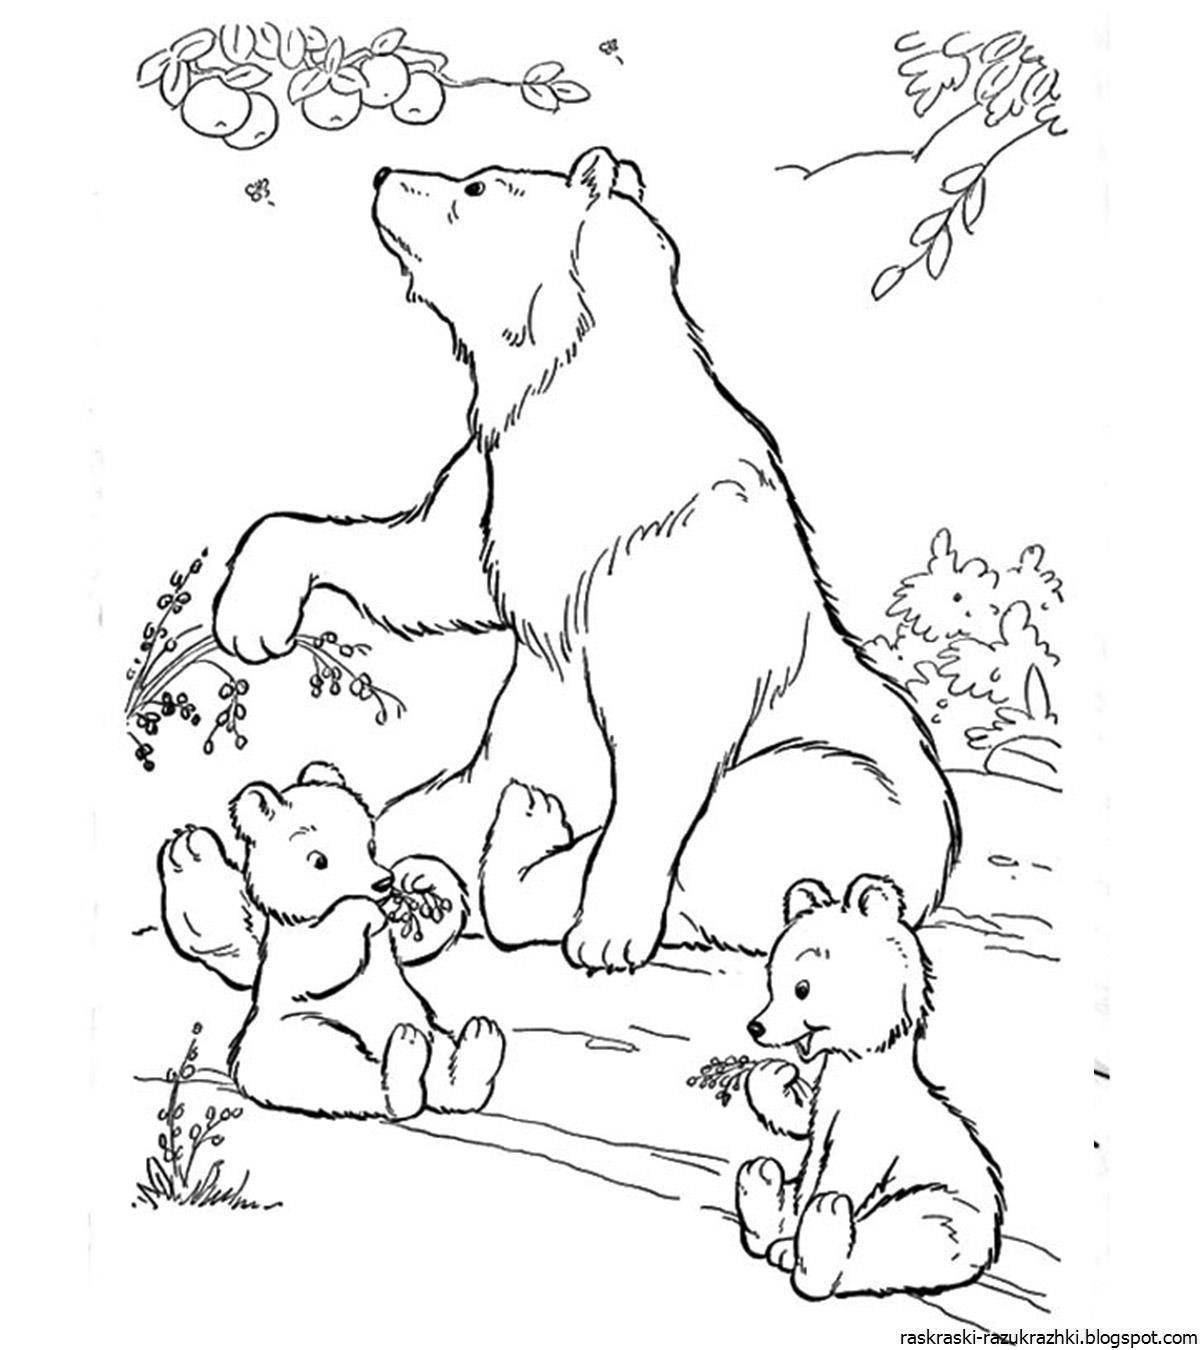 Joyful teddy bear coloring book for children 5-6 years old